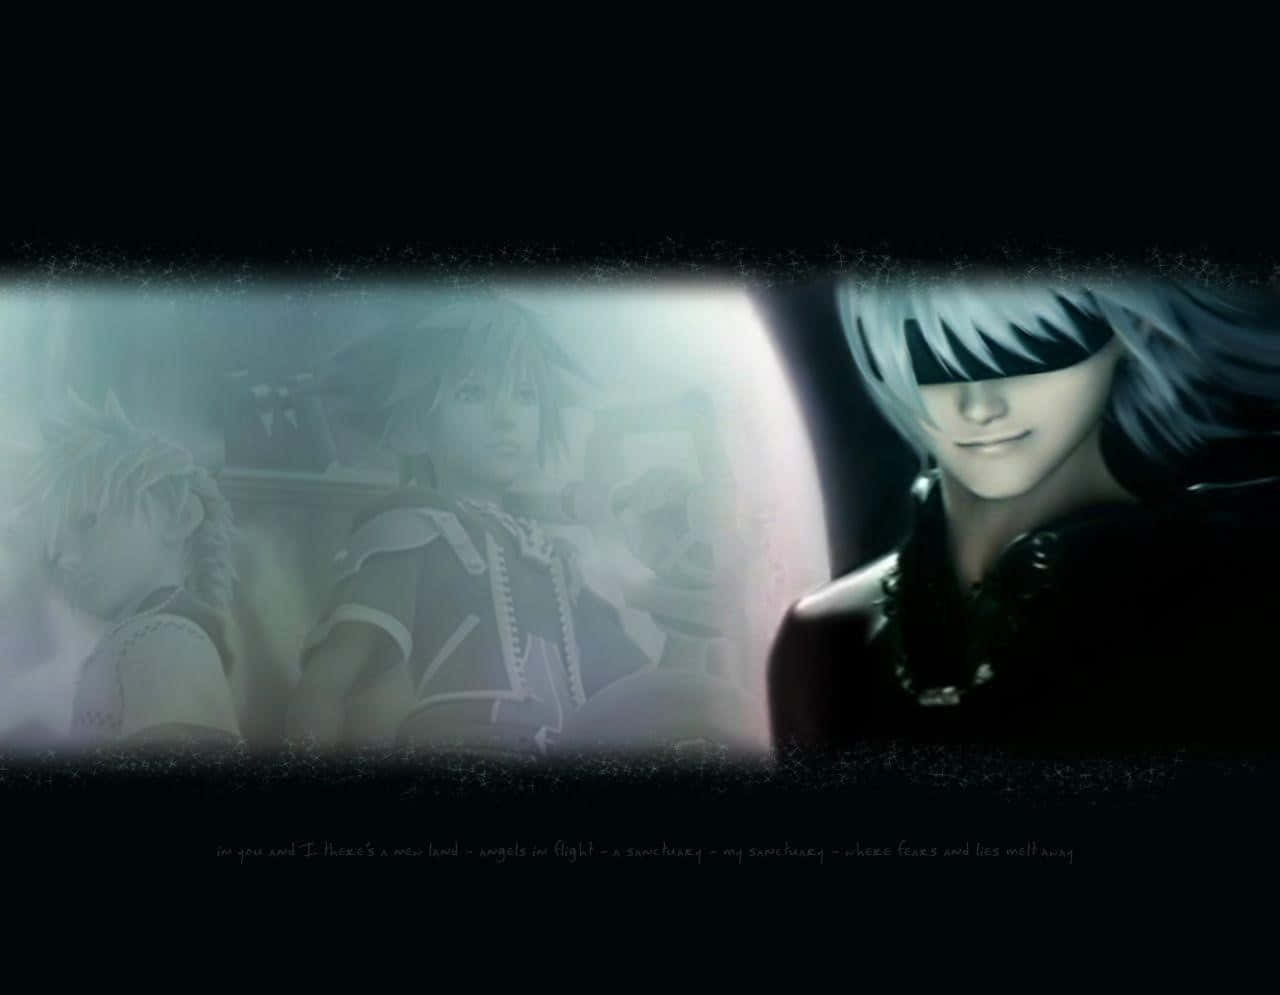 Riku from Kingdom Hearts wielding his iconic Keyblade Wallpaper